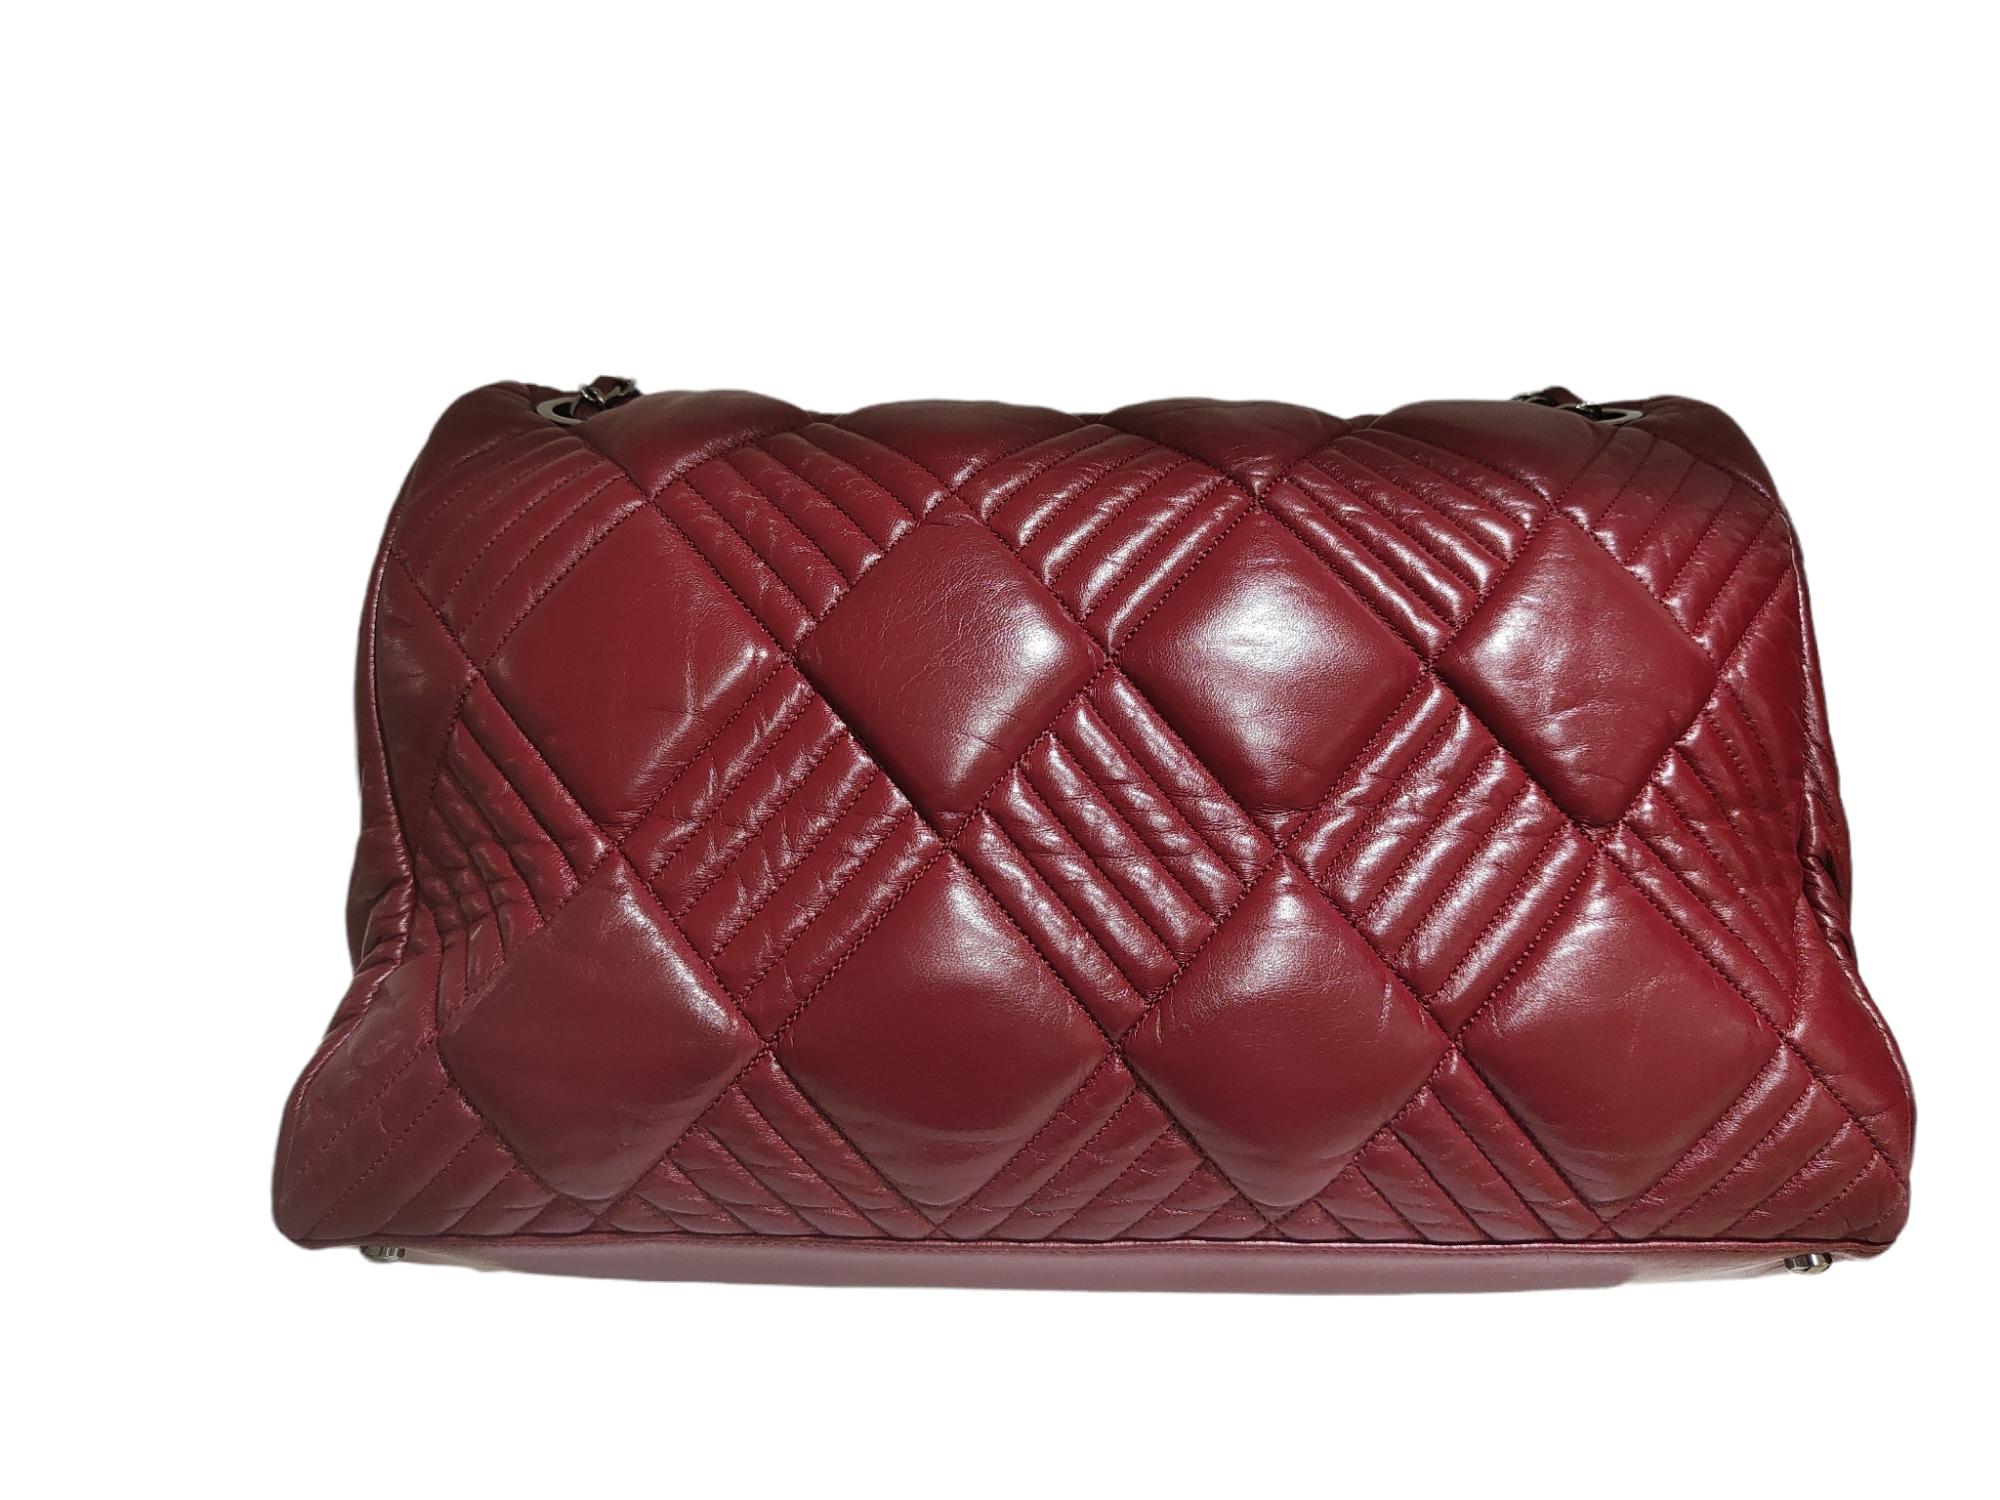 Chanel burgundy leather shoulder bag
totally made in italy
measurements; 25*36 cm, 11 cm depth